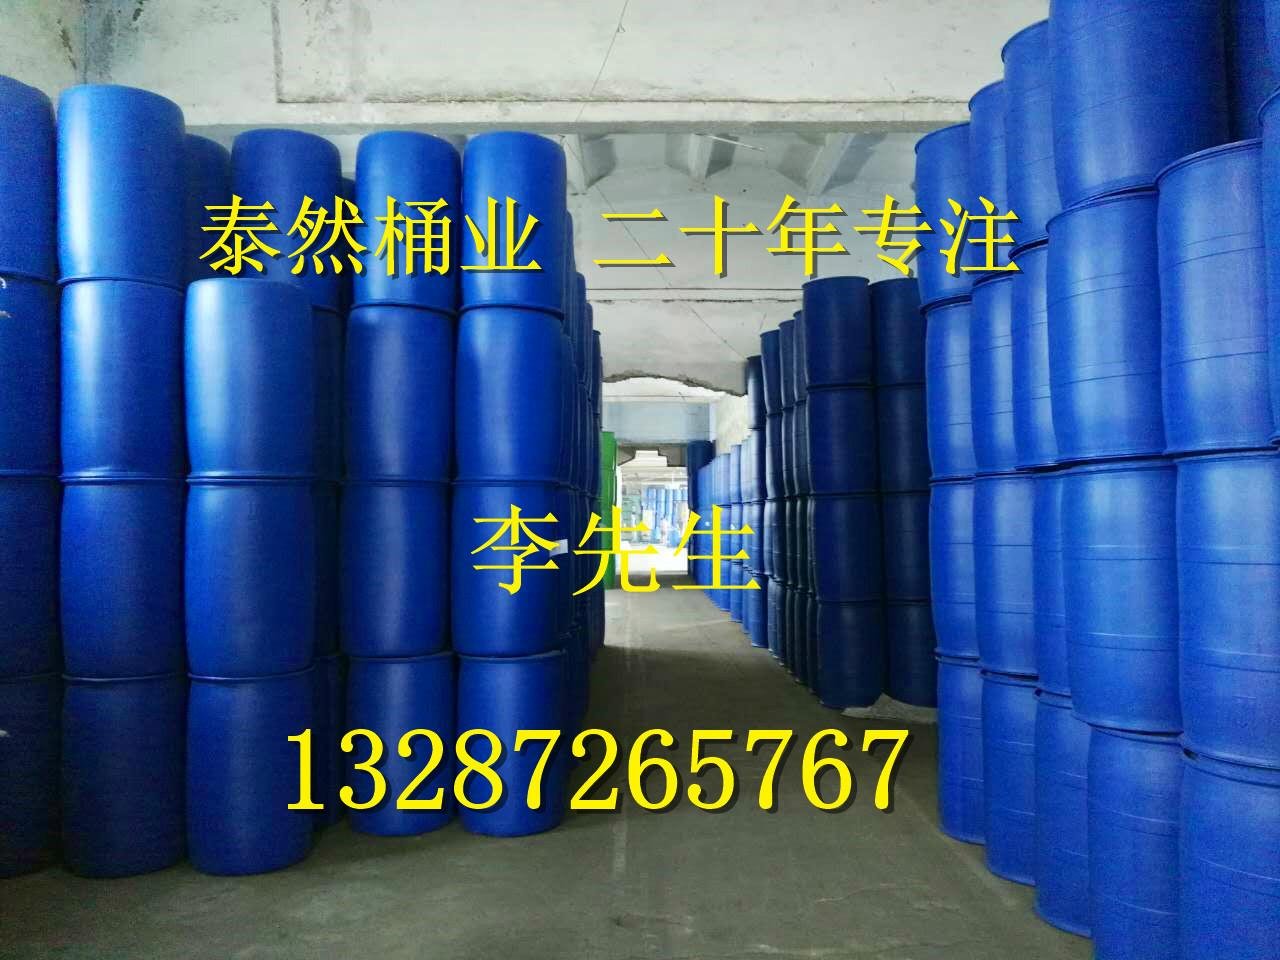 200L甲醇塑料桶|耐高温耐腐蚀|甲醇塑料包装桶|质优价廉 5